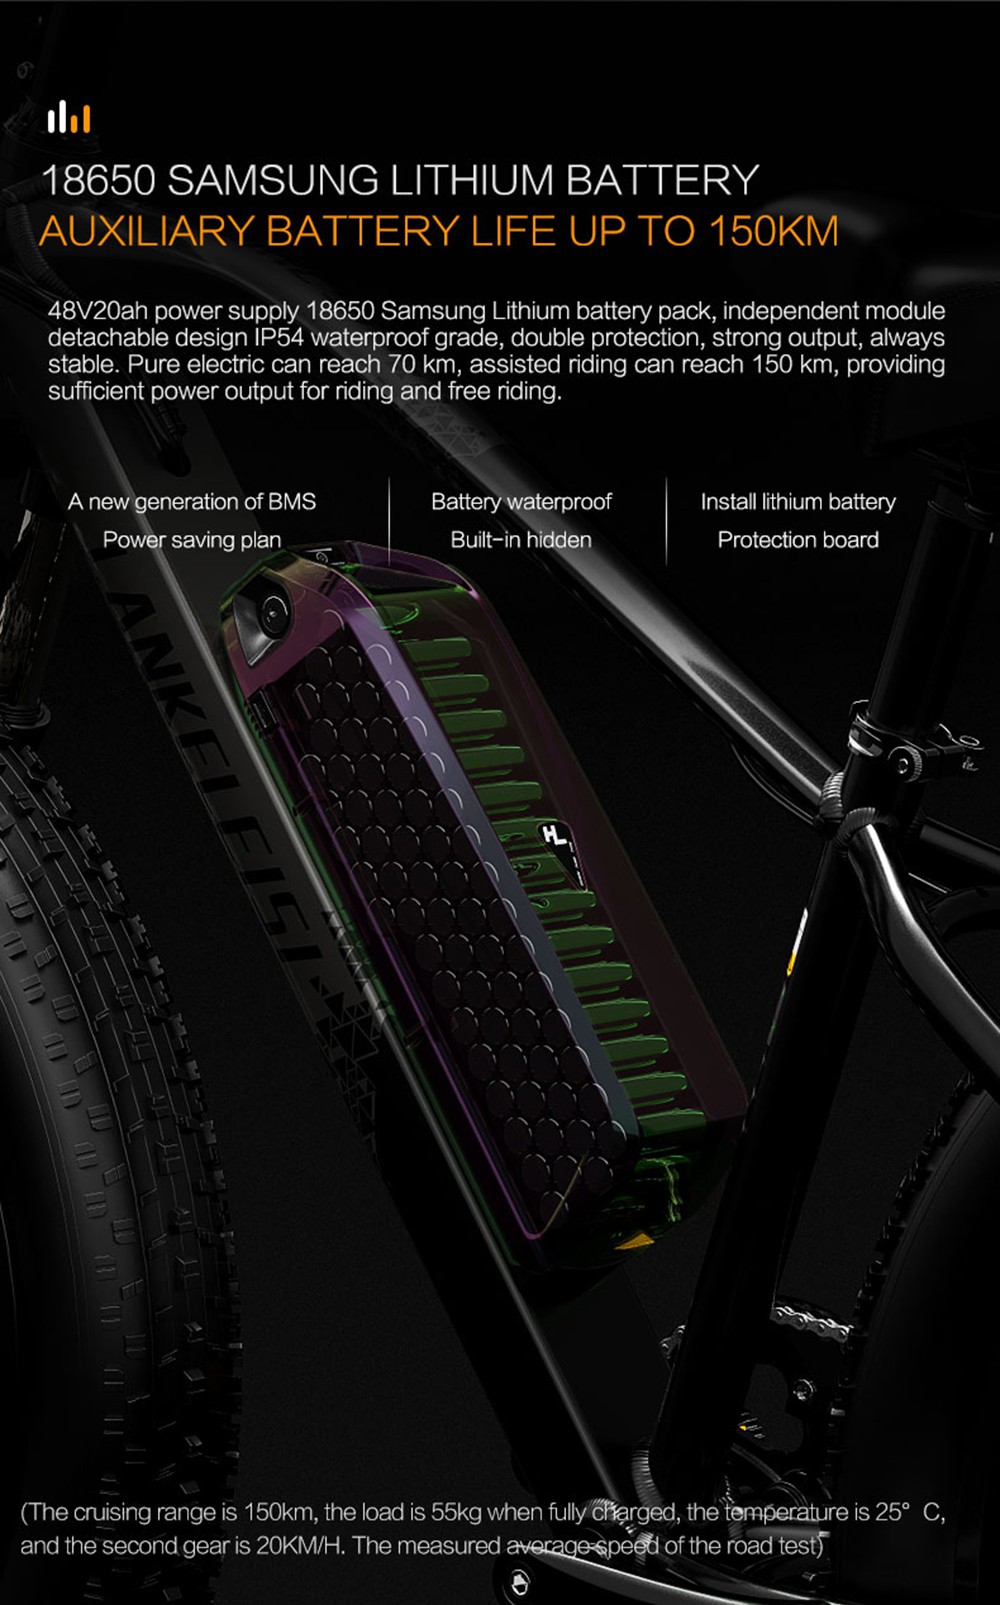 LANKELEISI MG740 PLUS Electric Bike 26*4.0'' Tires 1000W*2 Dual Motor 20Ah Battery 49km/h Max Speed - Black & Grey